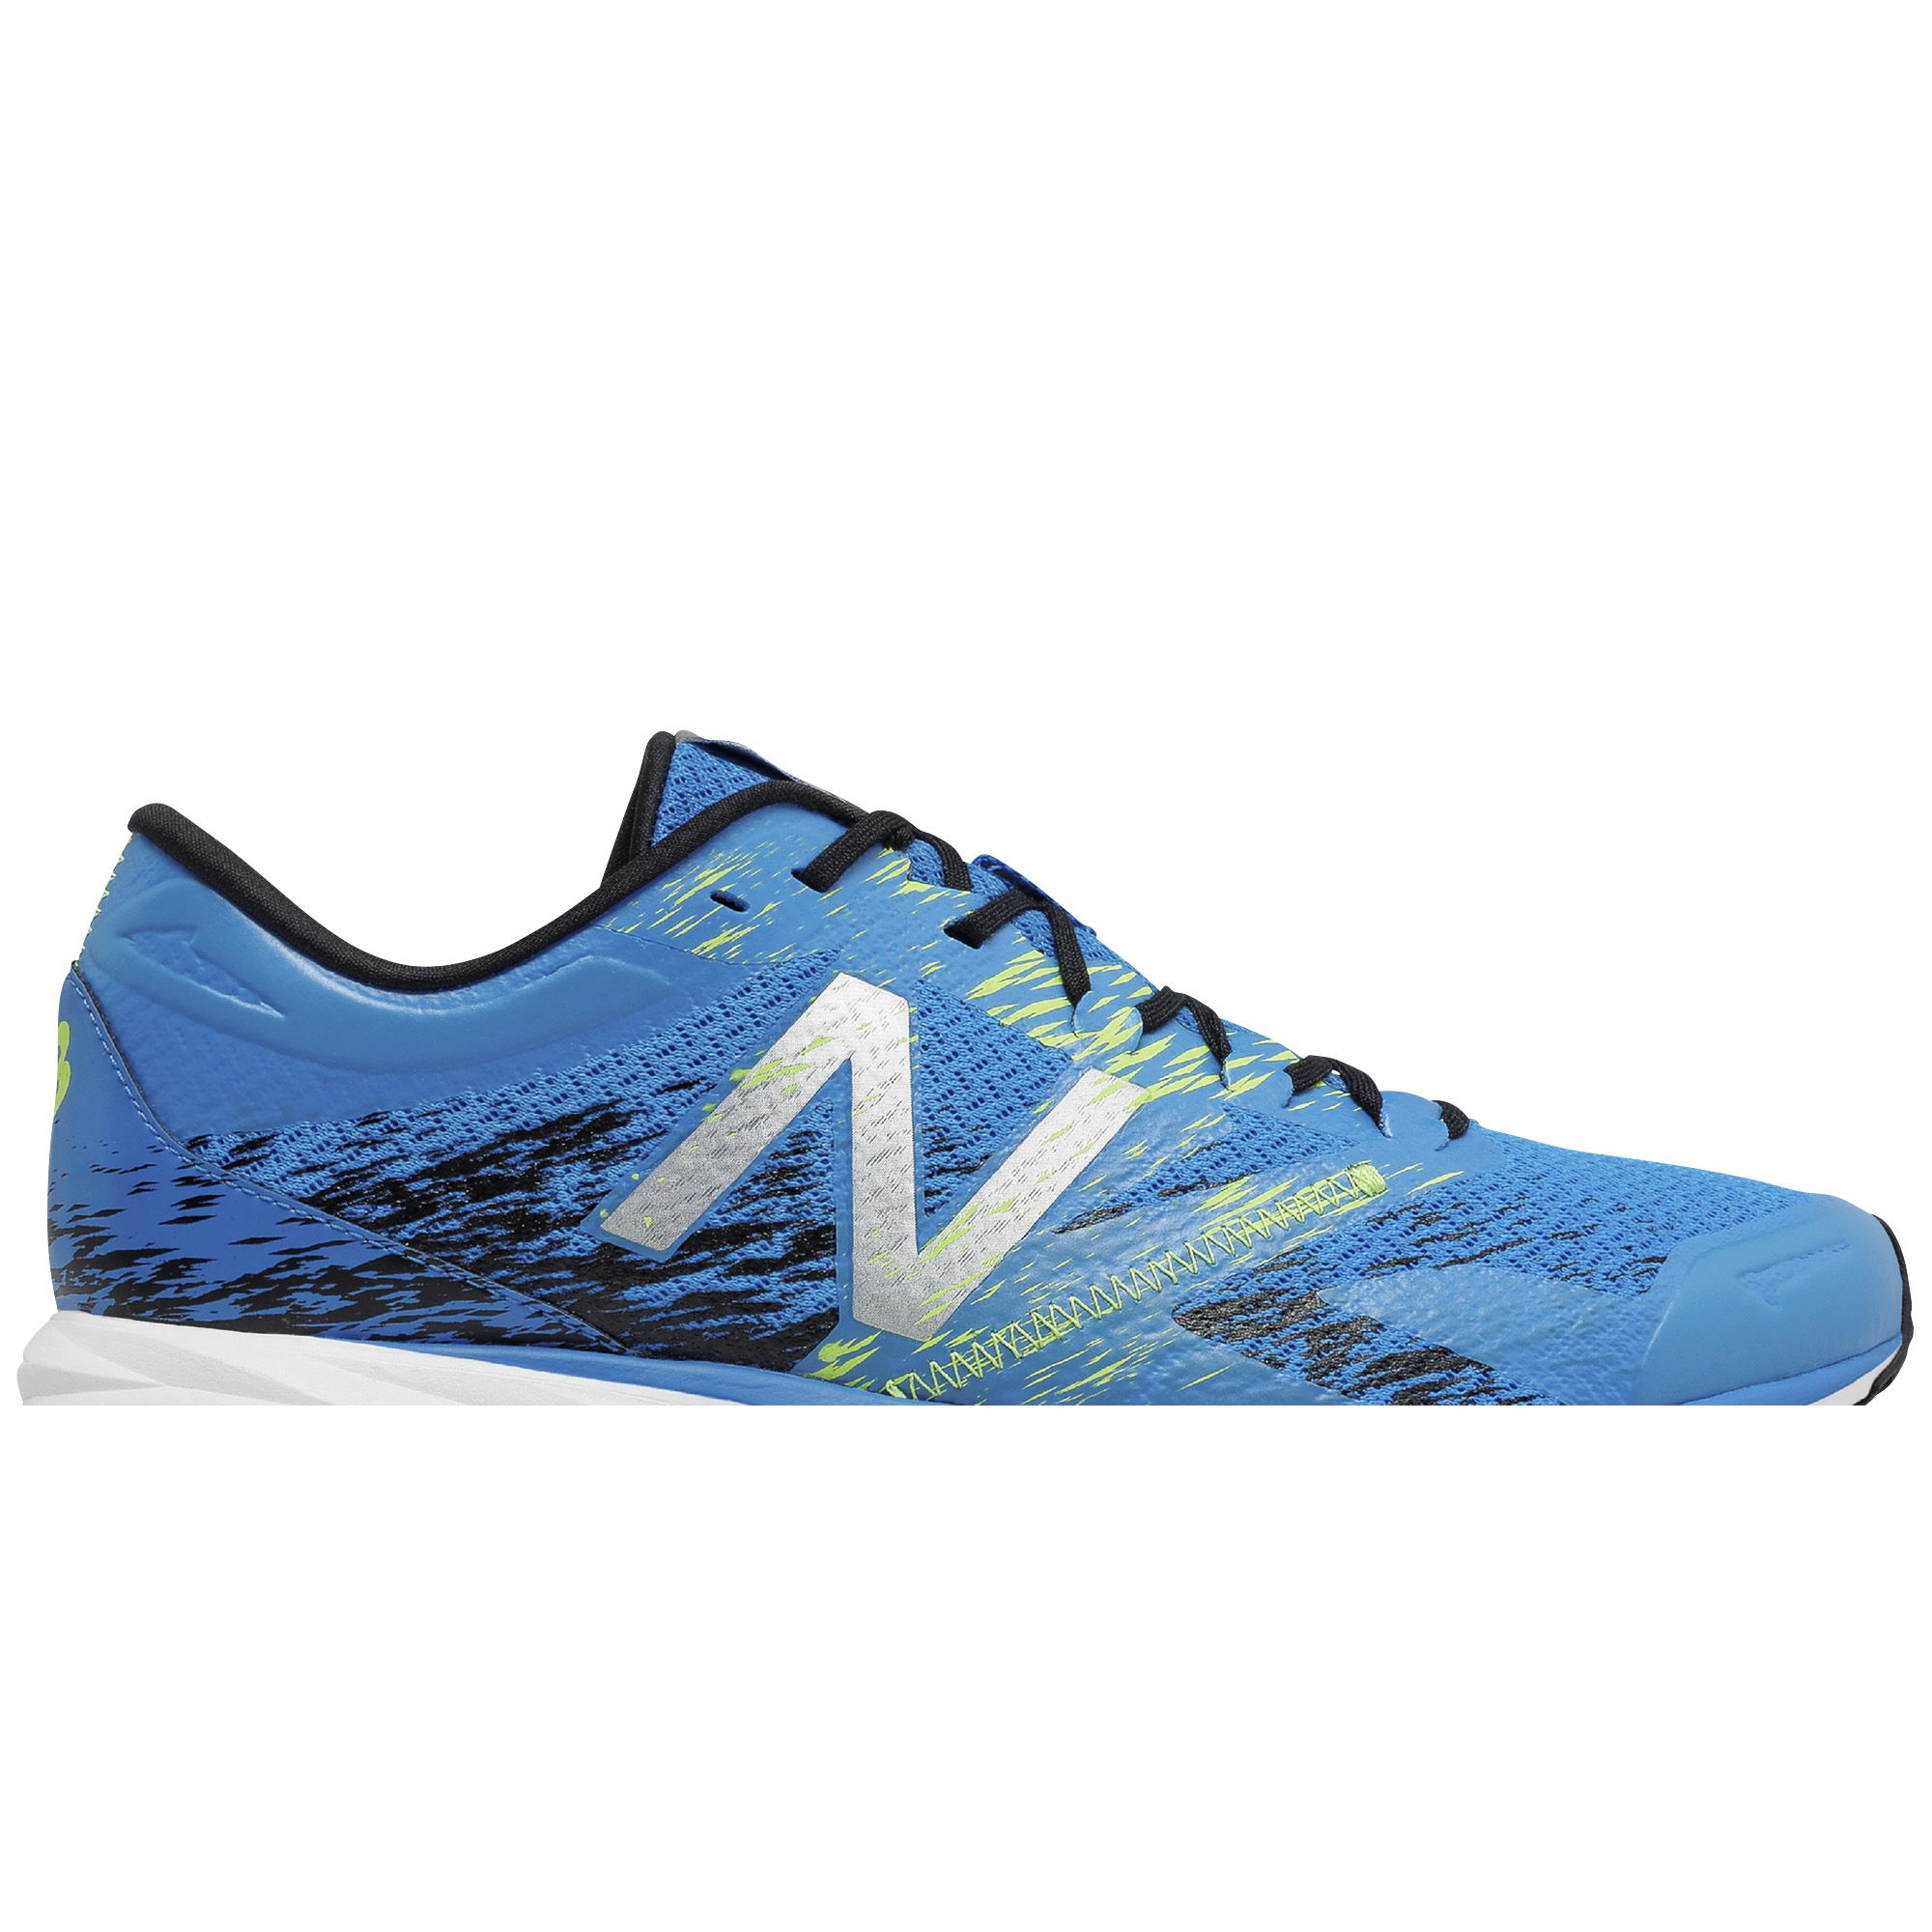 Fingerhut - New Balance Men's Speed Ride Running Shoe